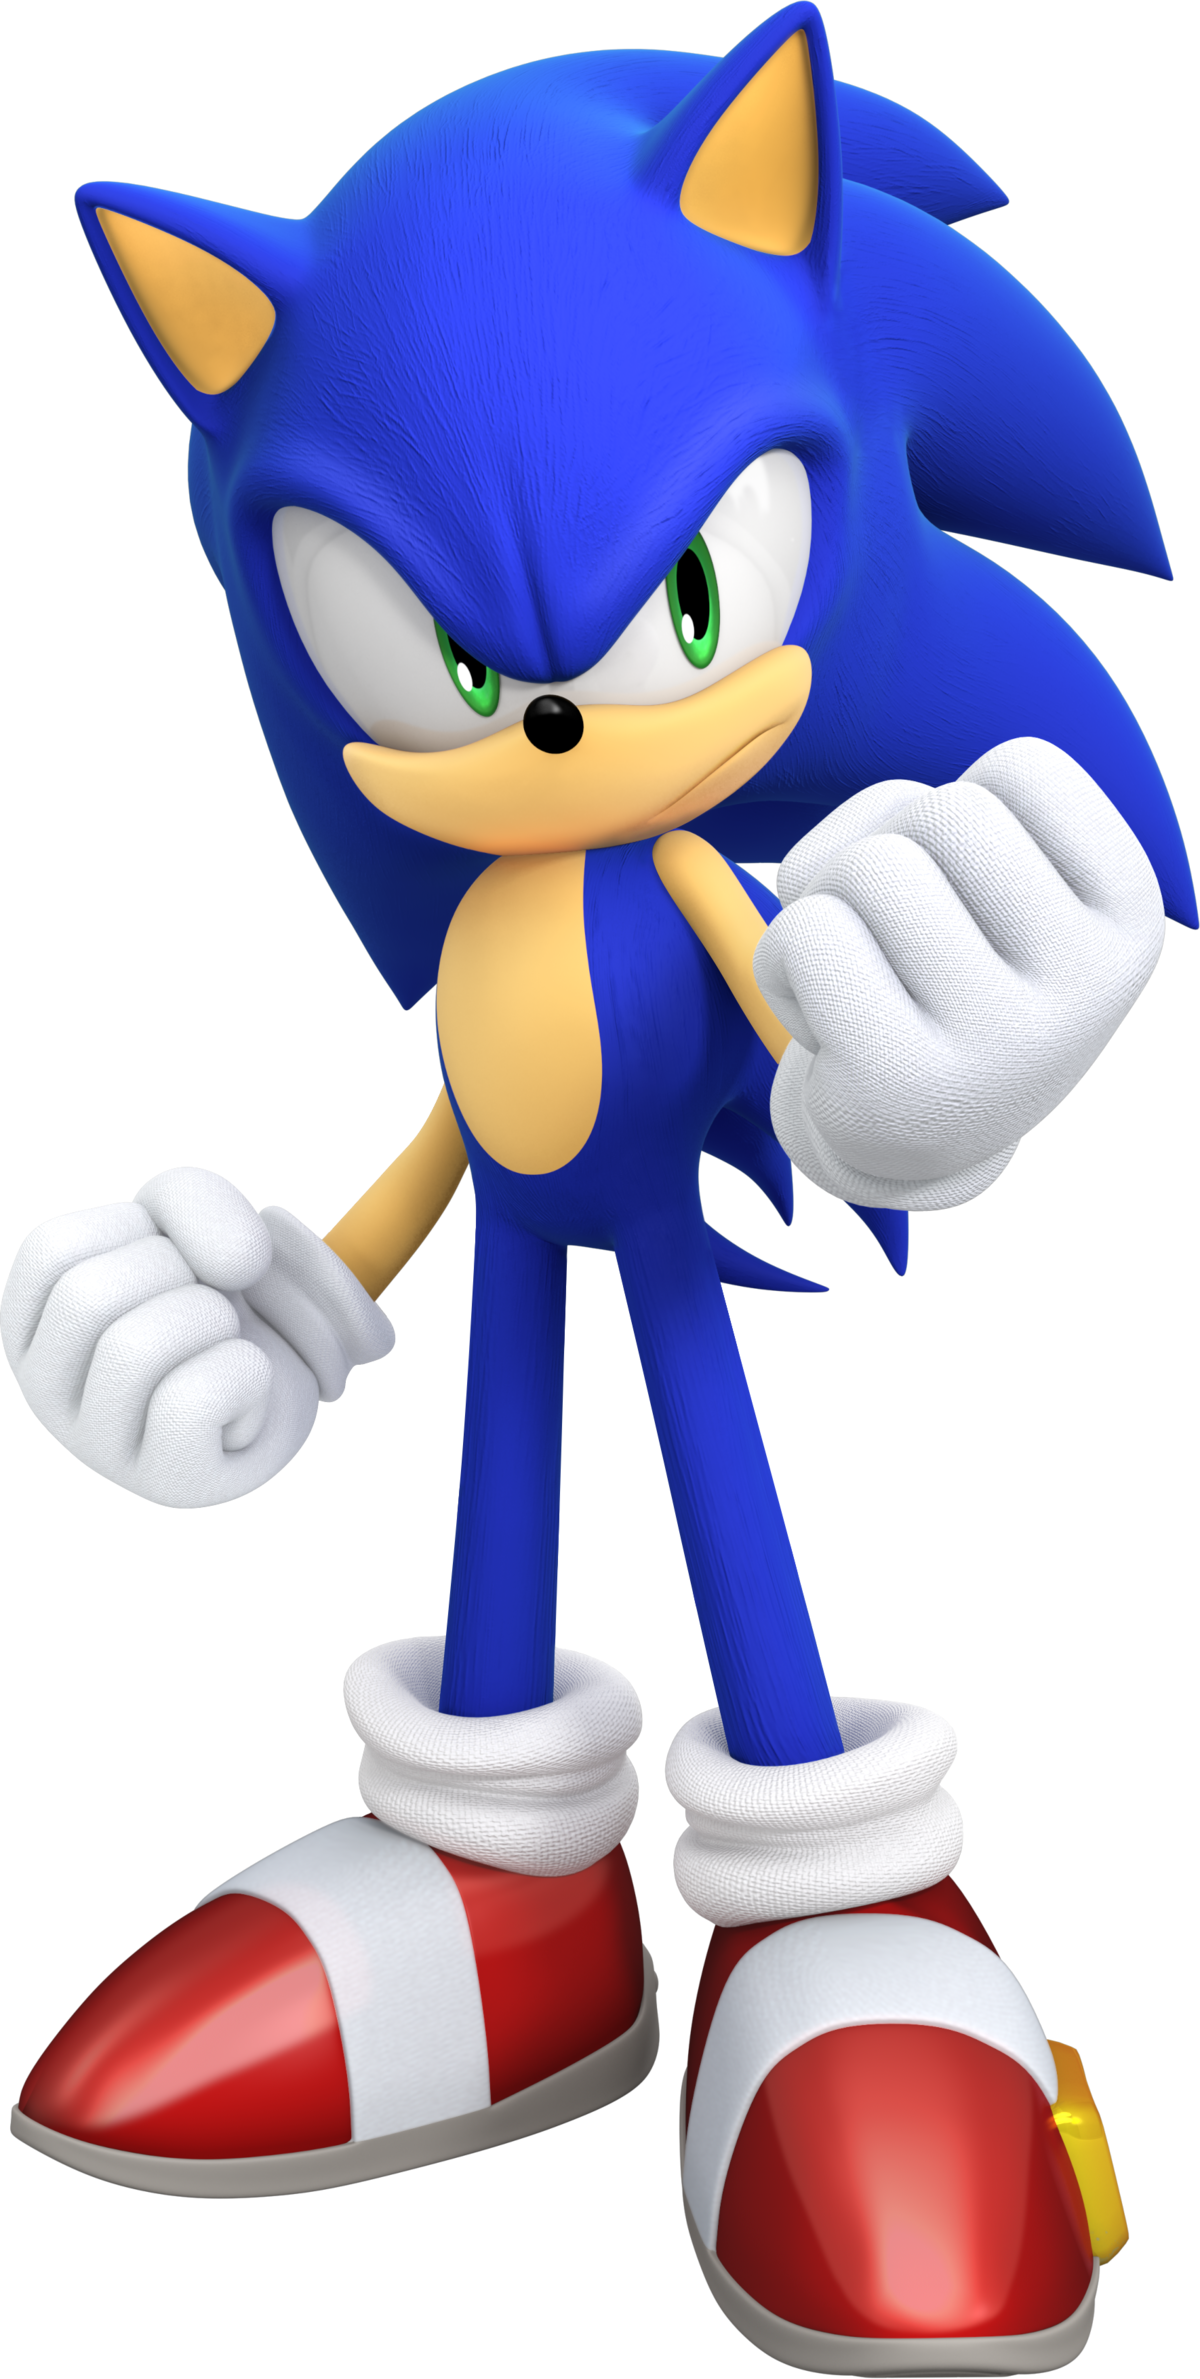 Sonic Adventure 2, Sonic Wiki Zone